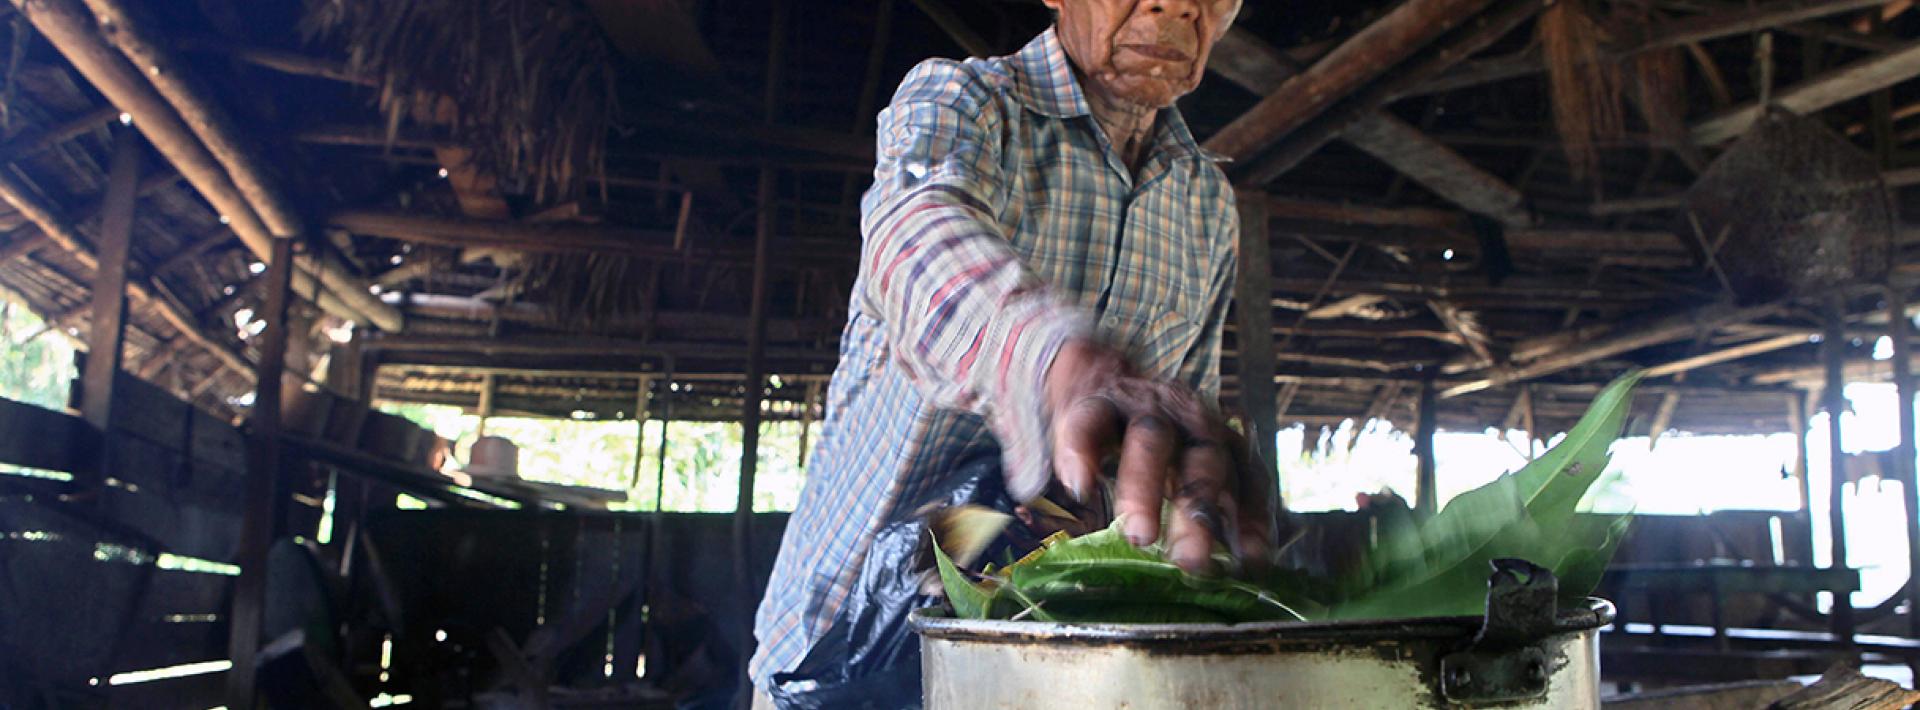 A man boils leaves over a large pot